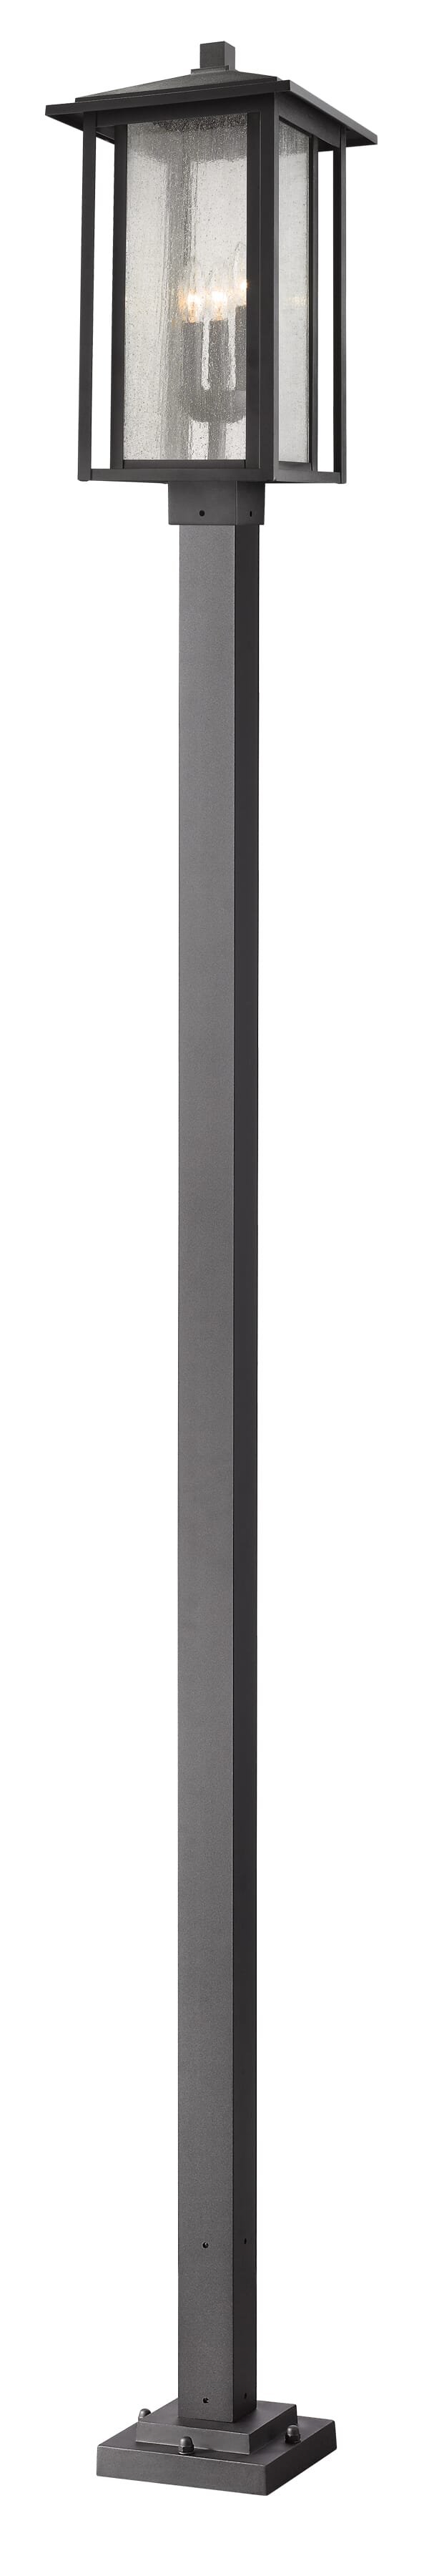 Aspen 3-Light Outdoor Post Mounted Fixture Light In Black